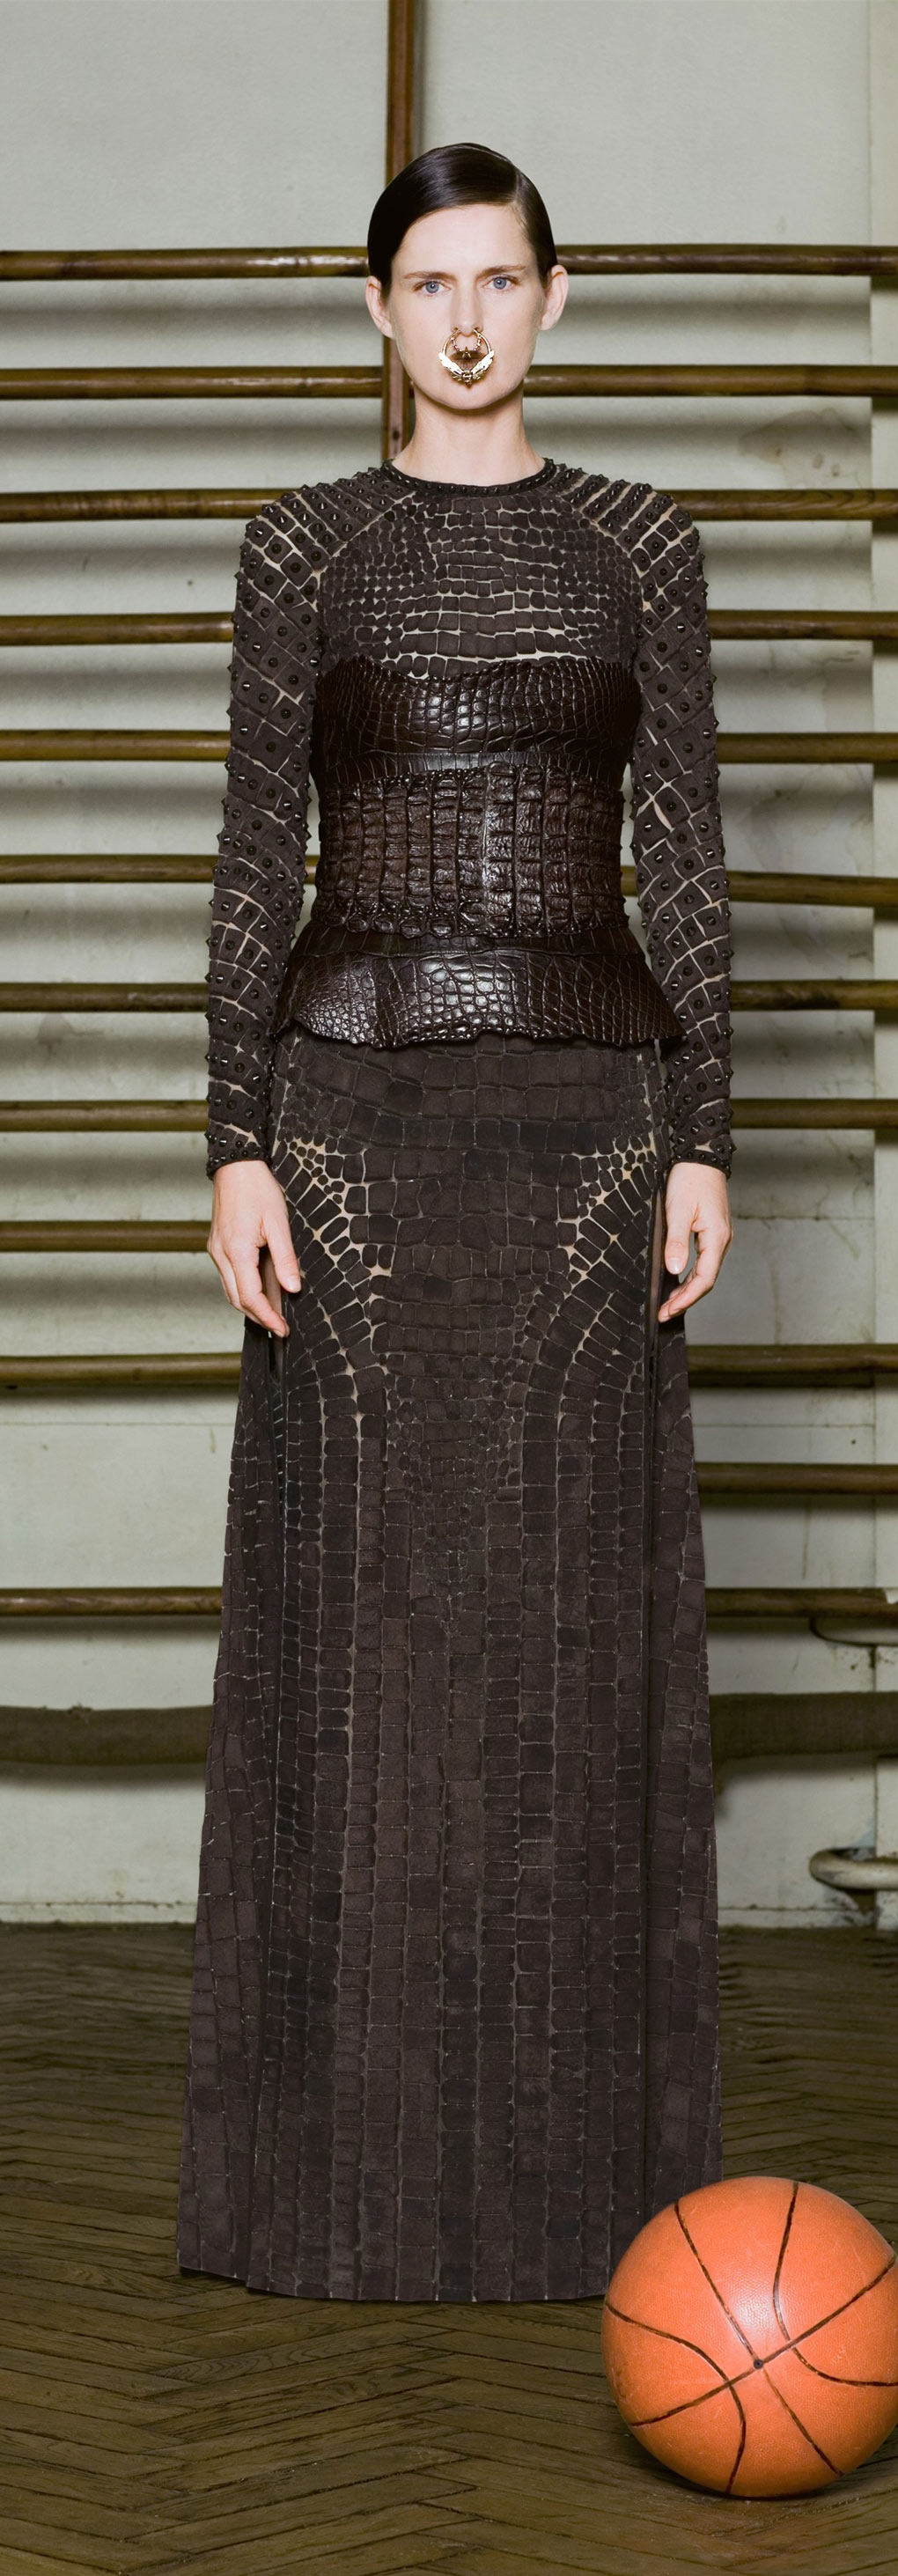 Givenchy Haute Couture spring 2012 Riccardo Tisci